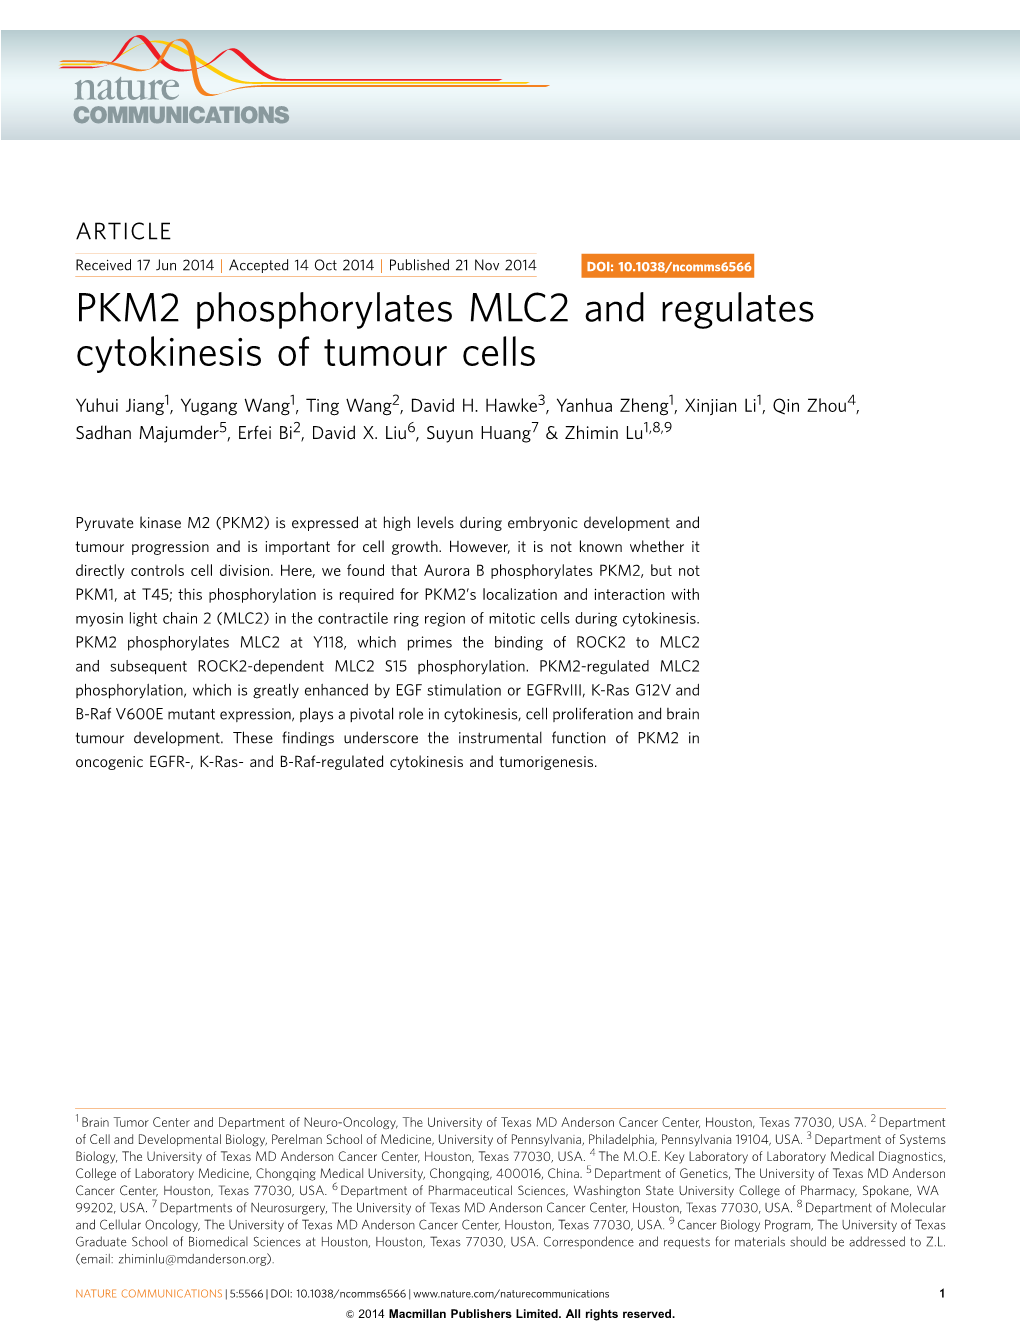 PKM2 Phosphorylates MLC2 and Regulates Cytokinesis of Tumour Cells